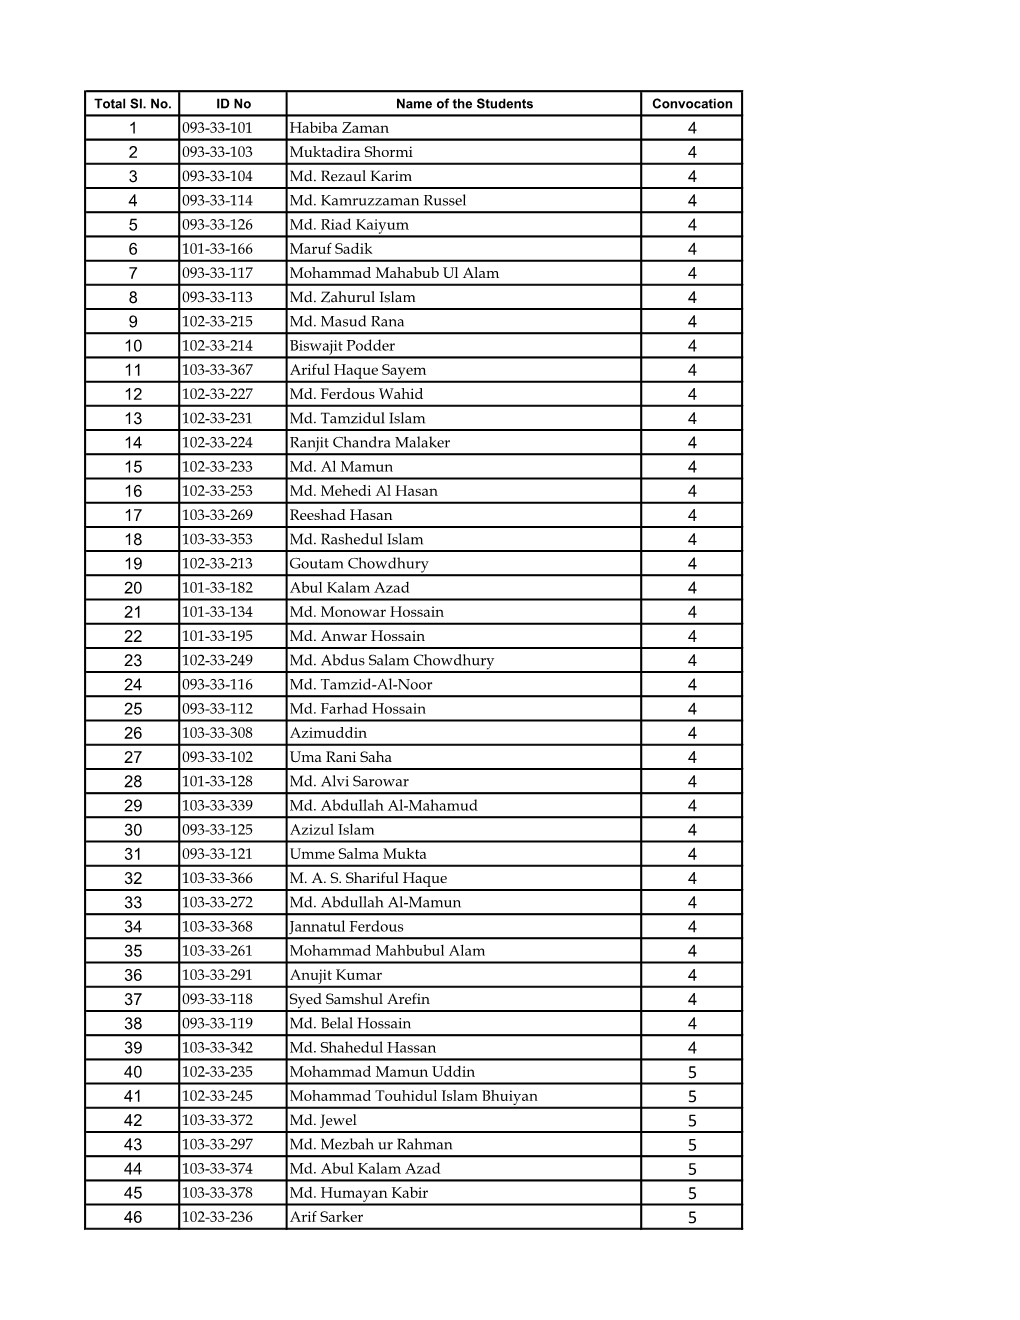 List of Alumni